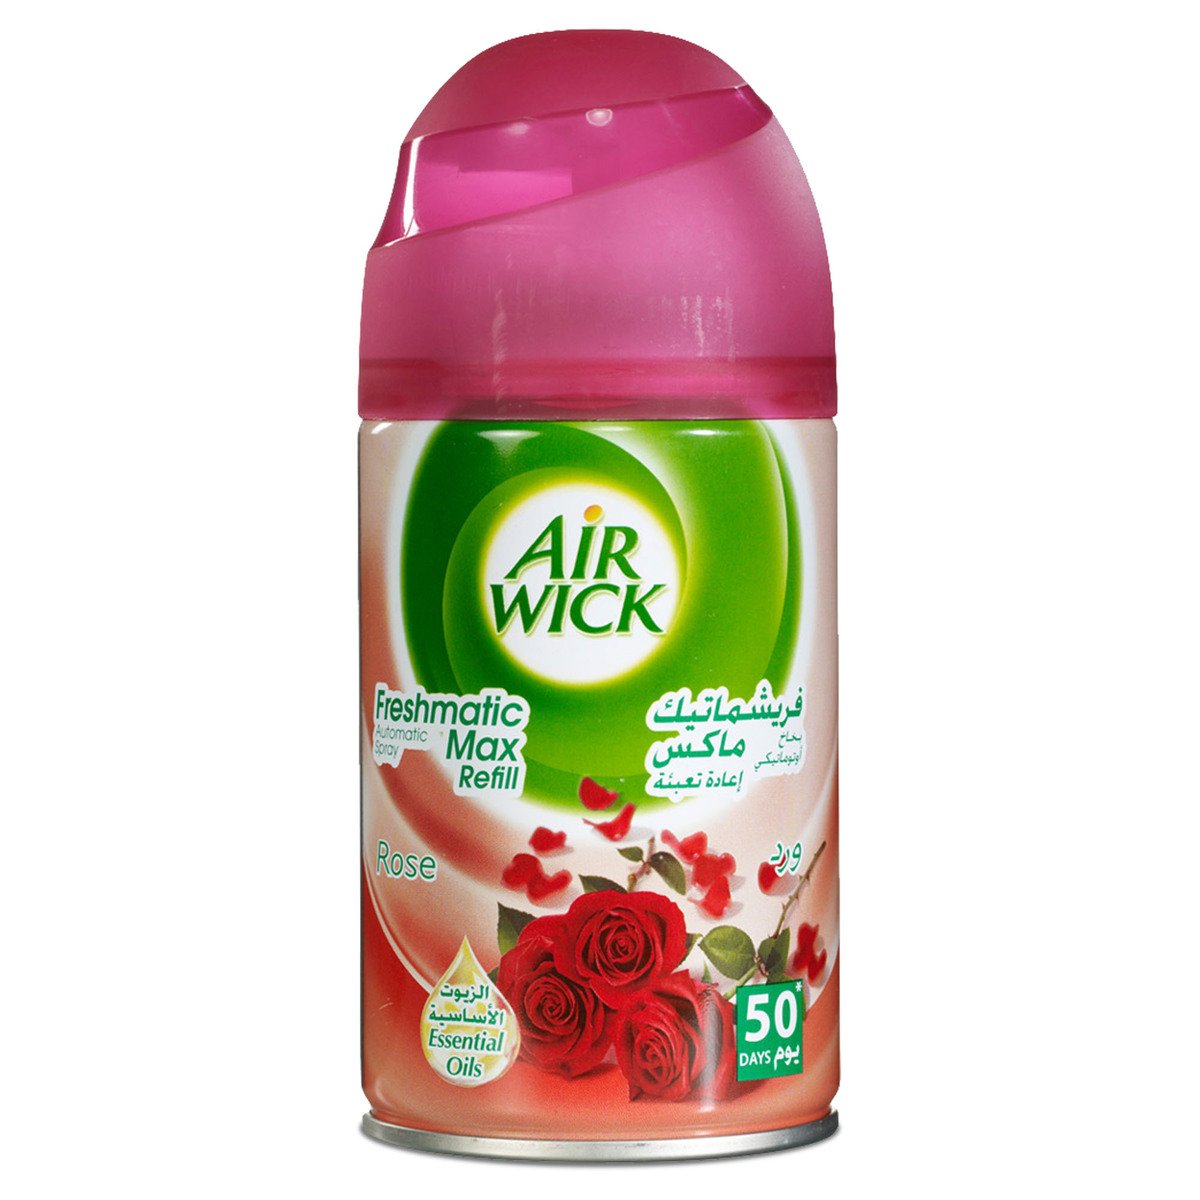 Airwick Freshmatic Autospray Refill Rose Fragrance 250 ml